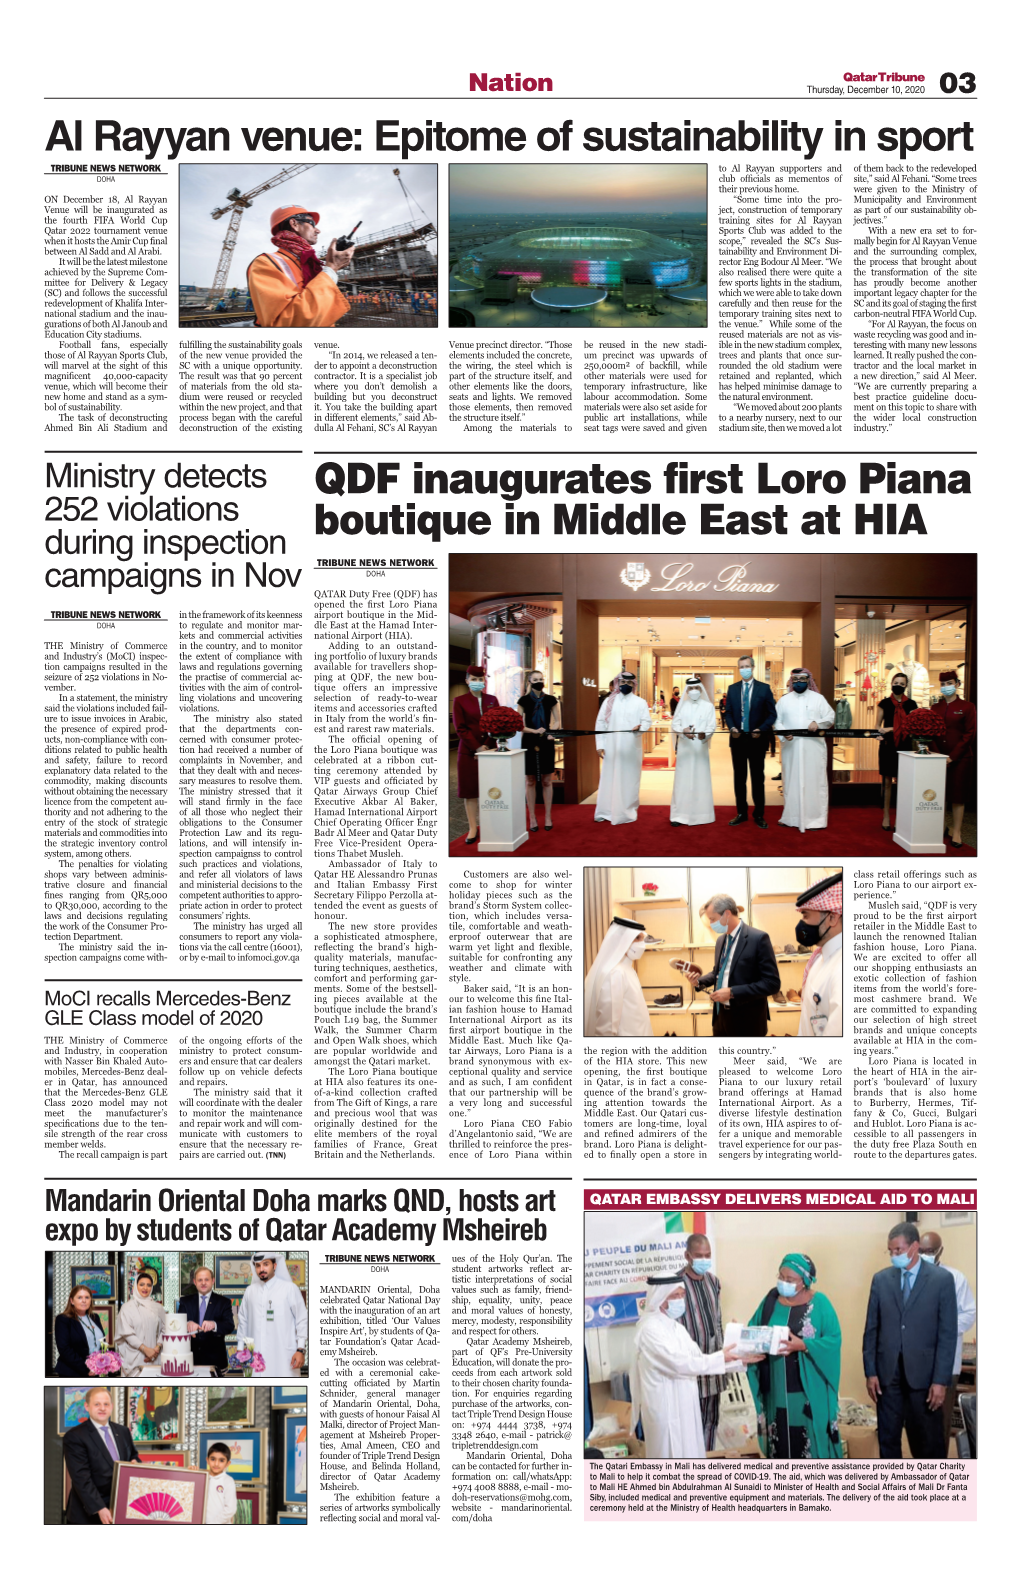 QDF Inaugurates First Loro Piana Boutique in Middle East at HIA Al